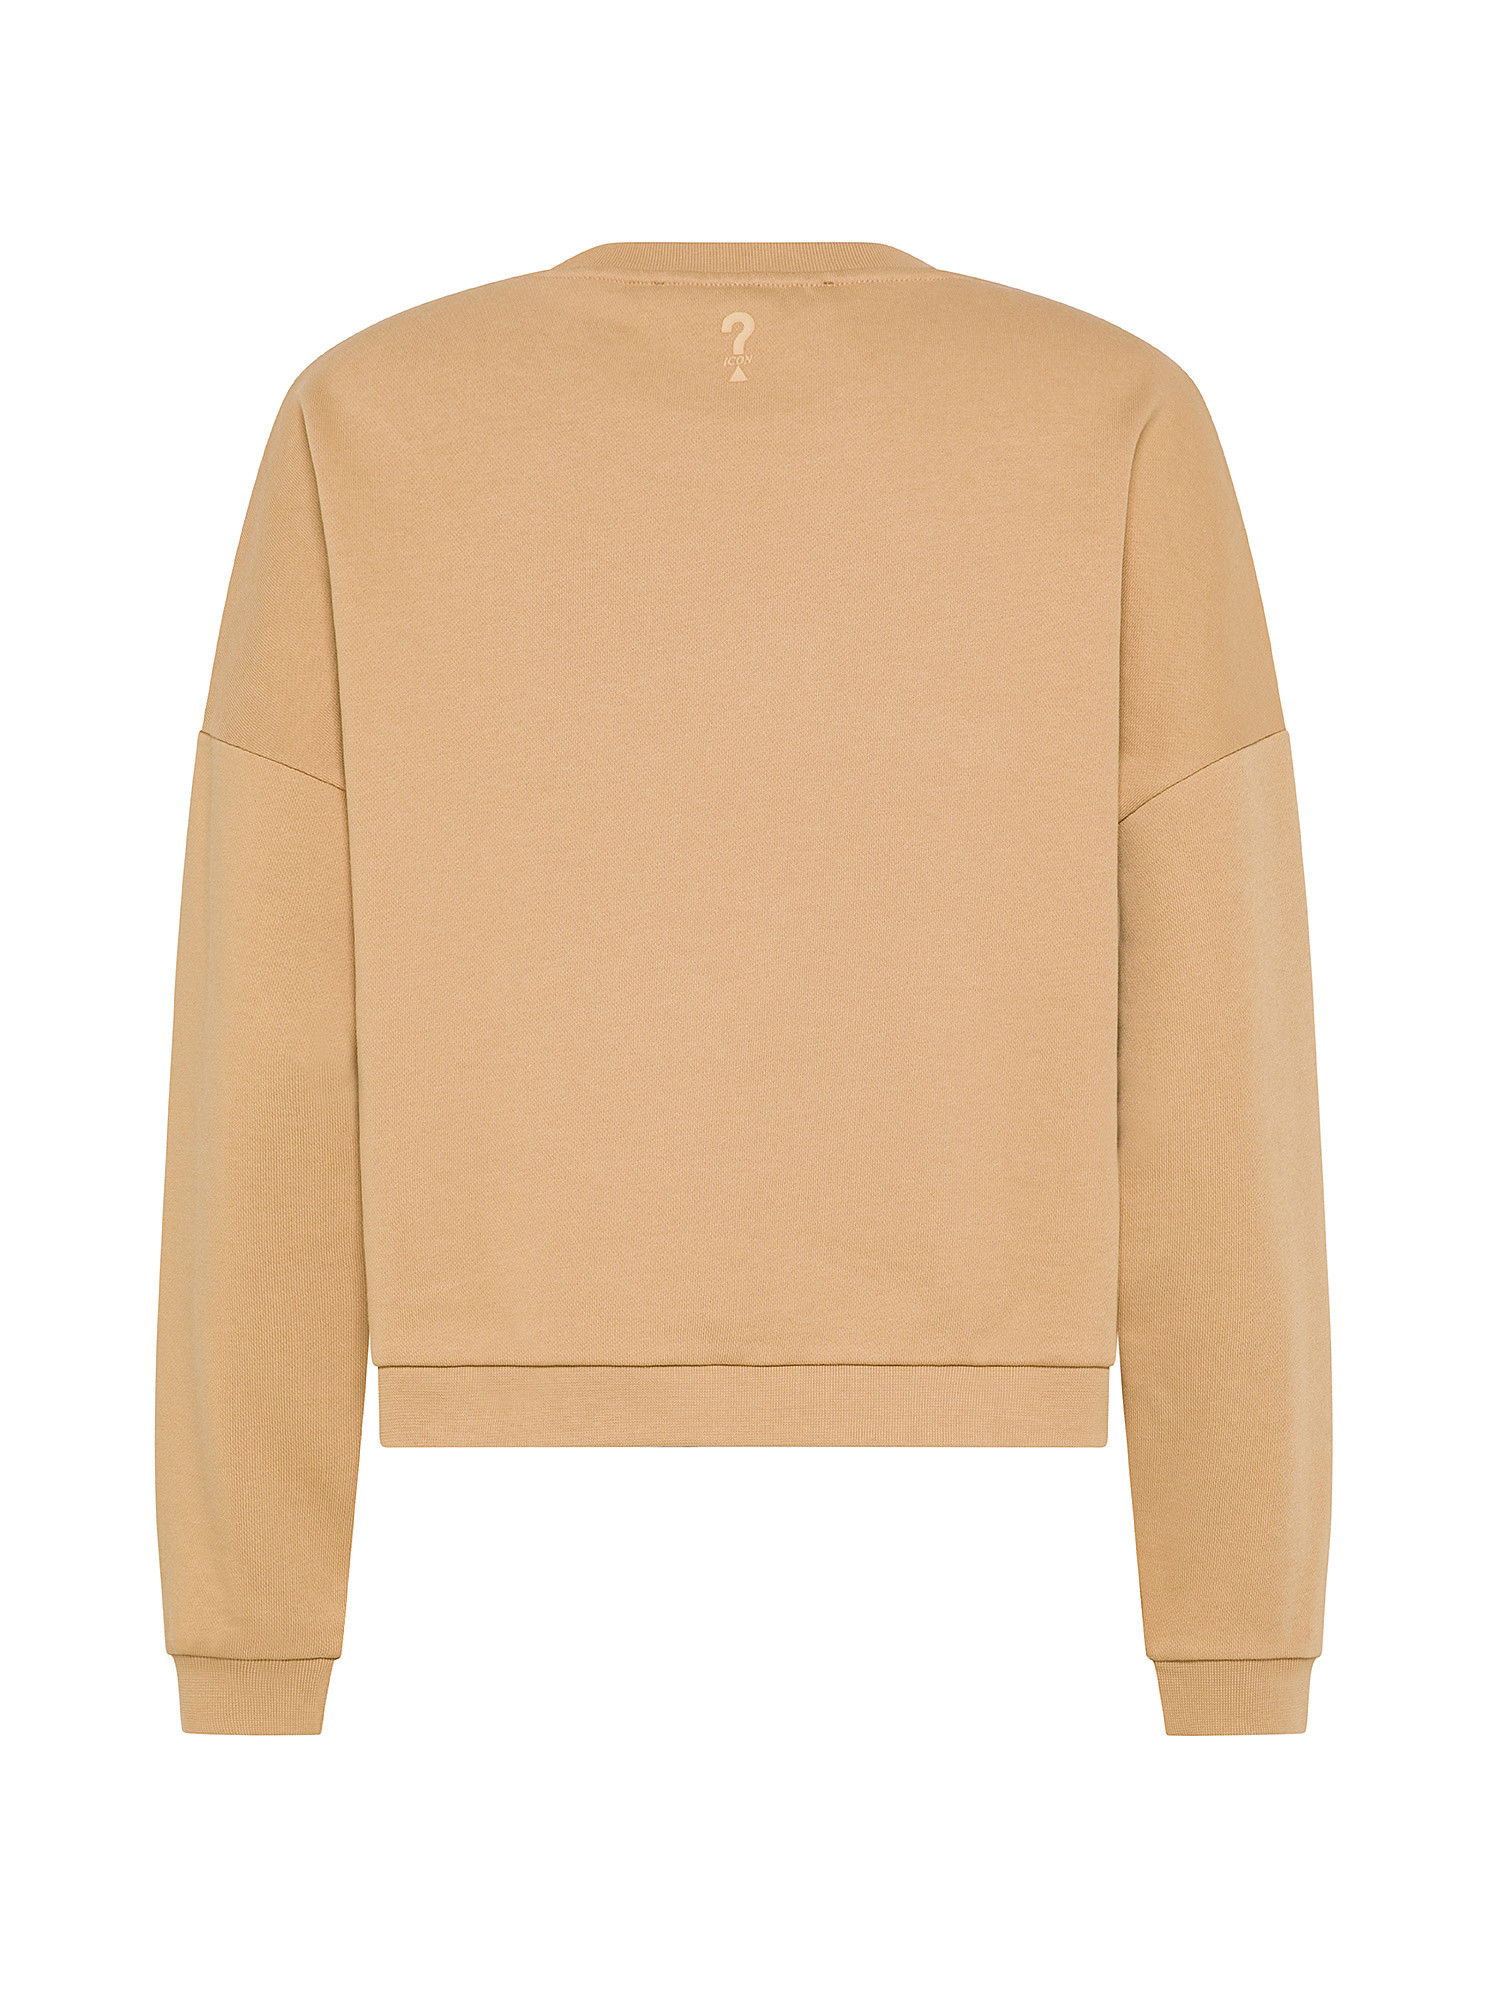 Cotton blend sweatshirt, Dark Beige, large image number 1